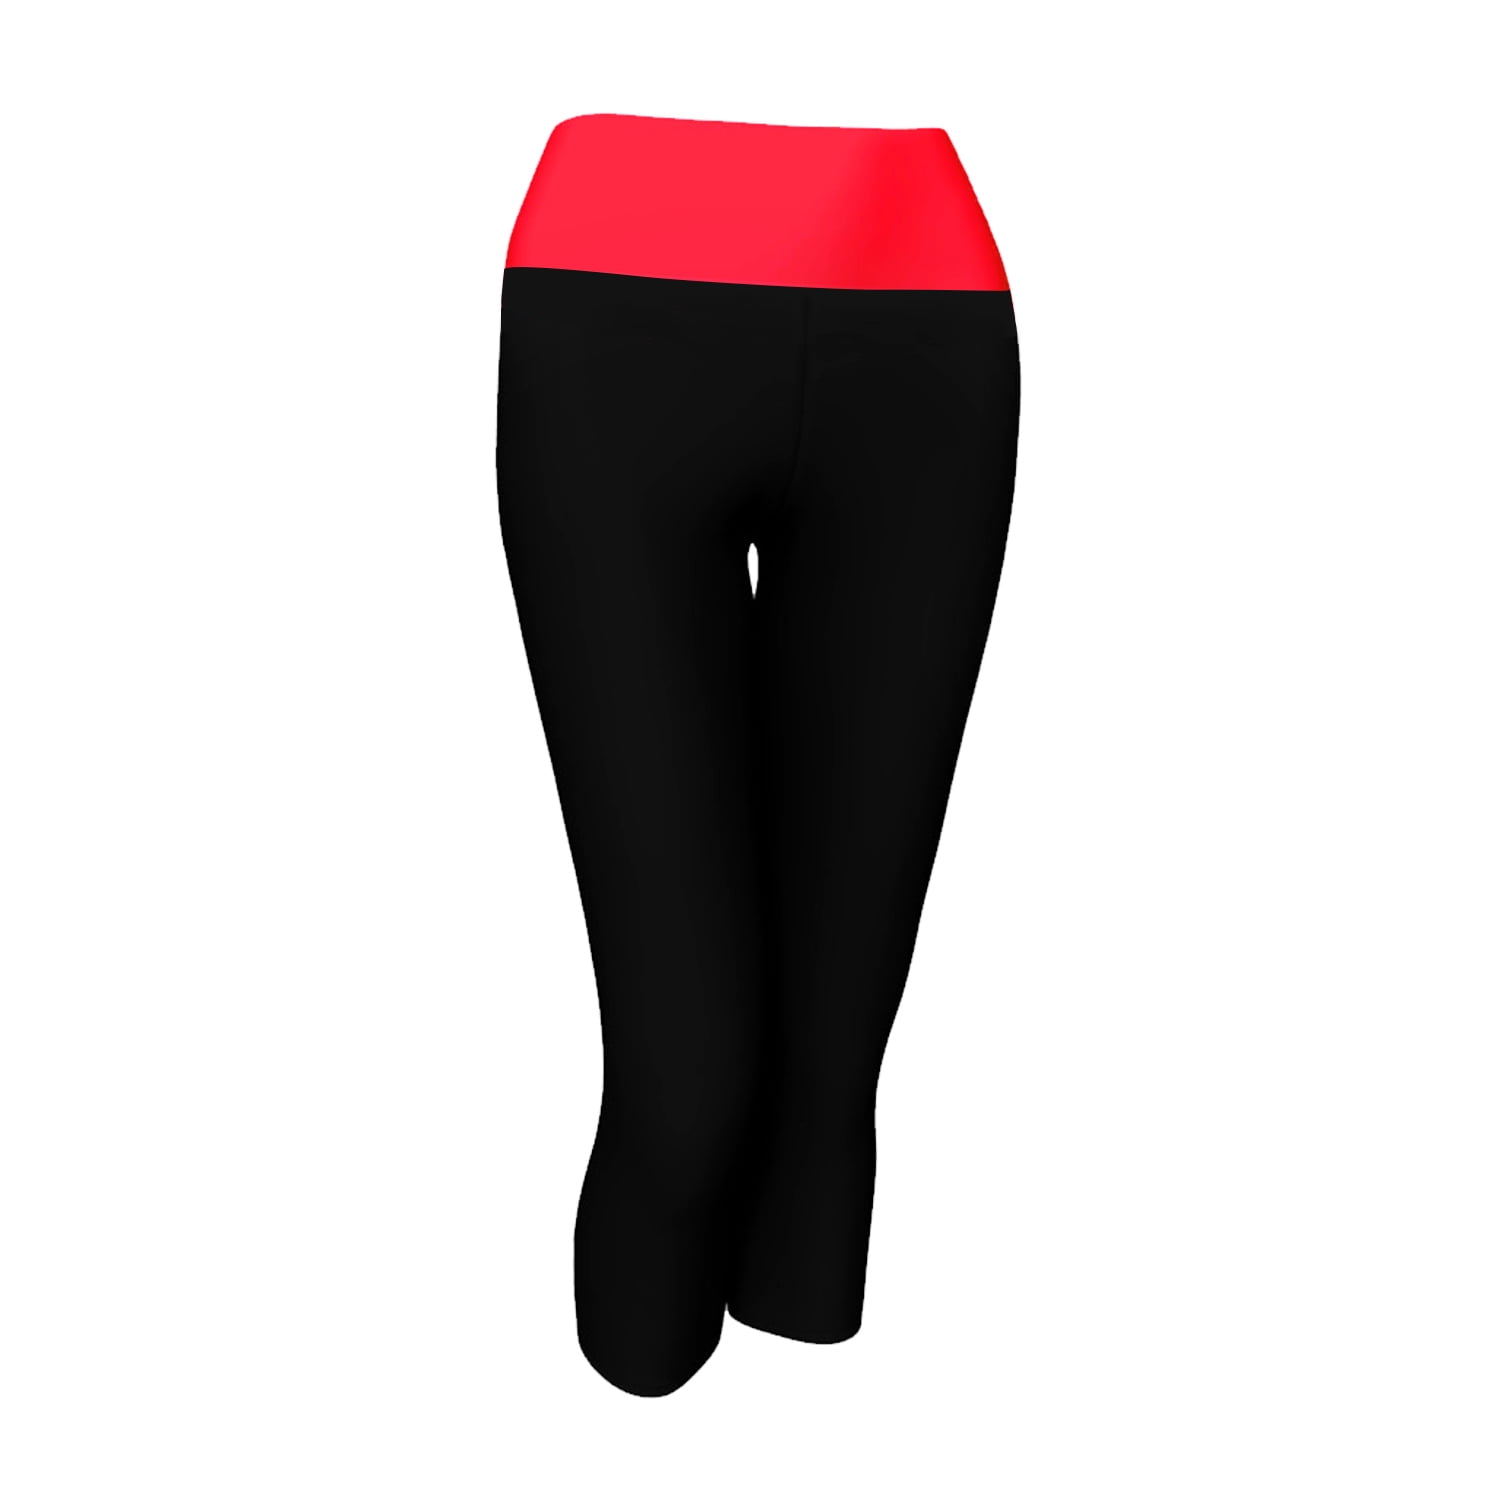 Women's A2S SAVG Yoga Capri Leggings Black w/ Pink Print – Avg2Savg Apparel